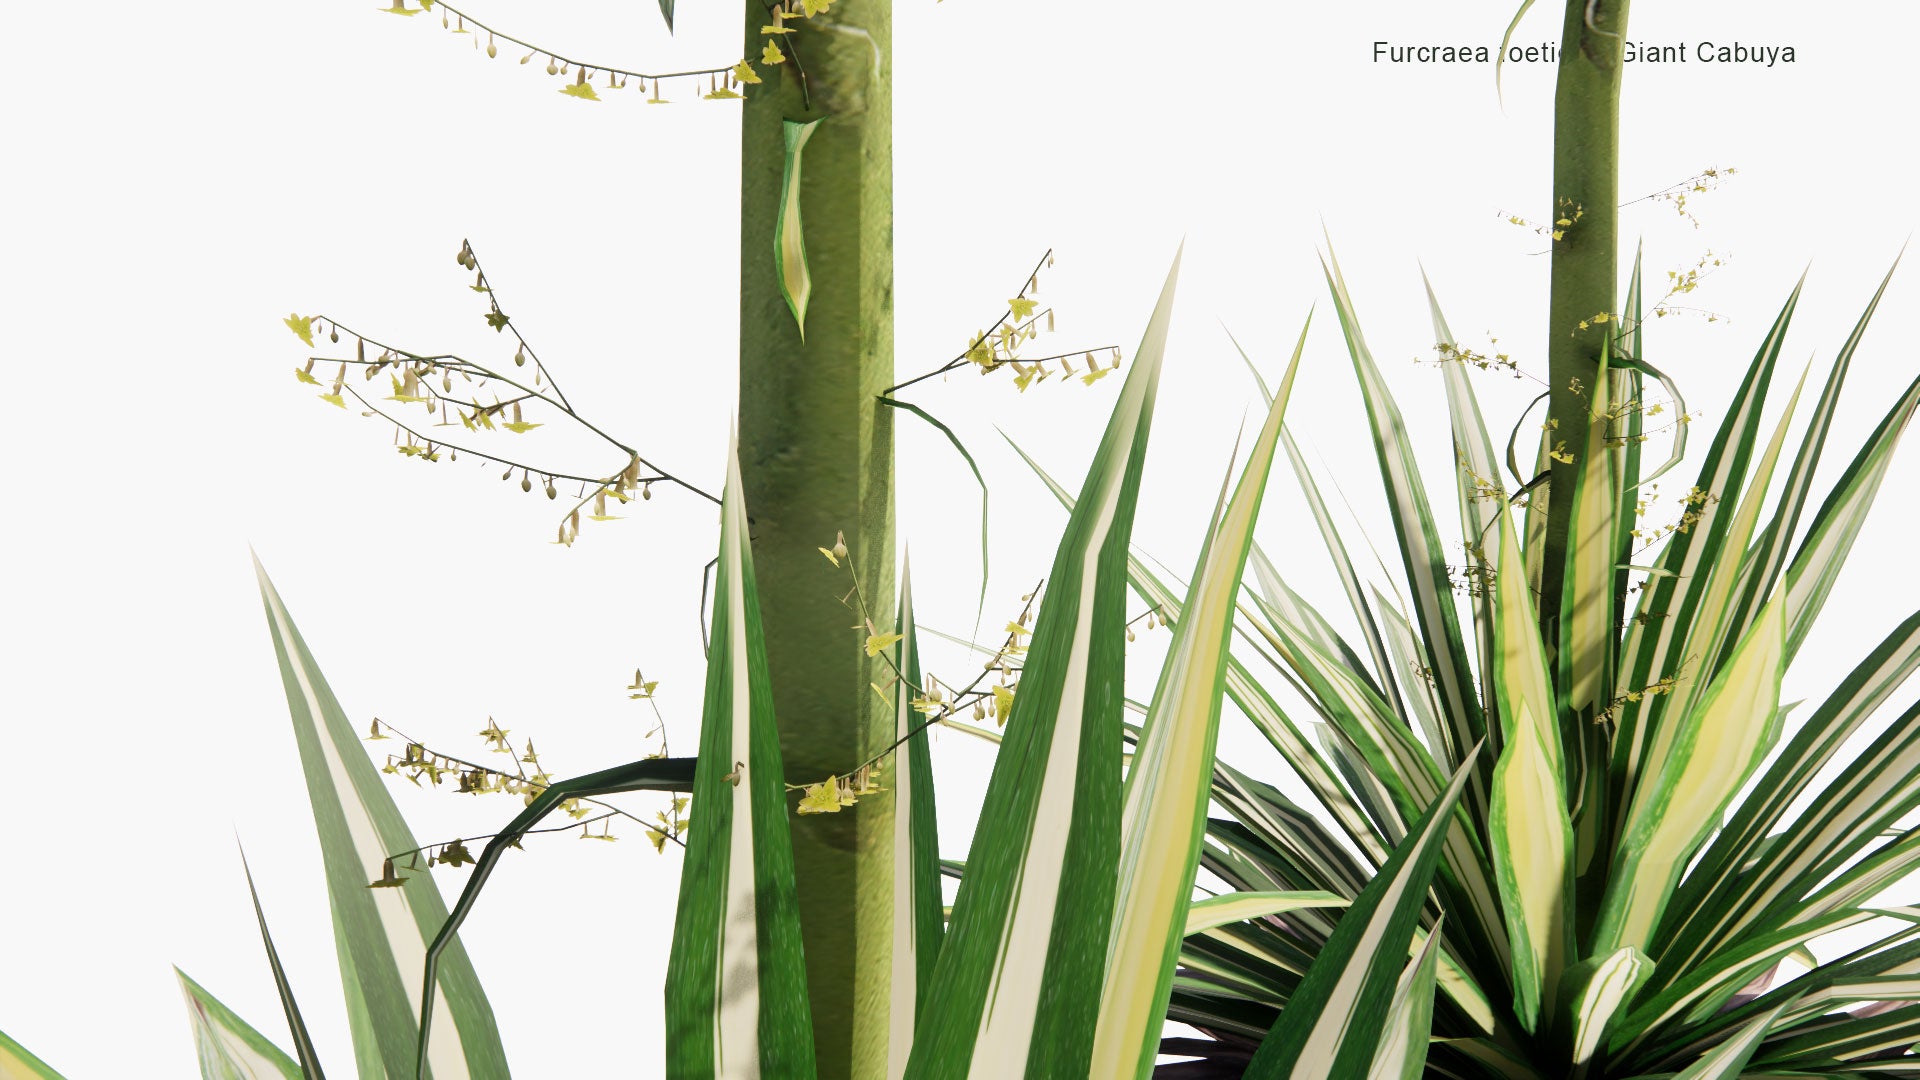 Low Poly Furcraea Foetida - Giant Cabuya, Green-Aloe, Mauritius-Hemp (3D Model)